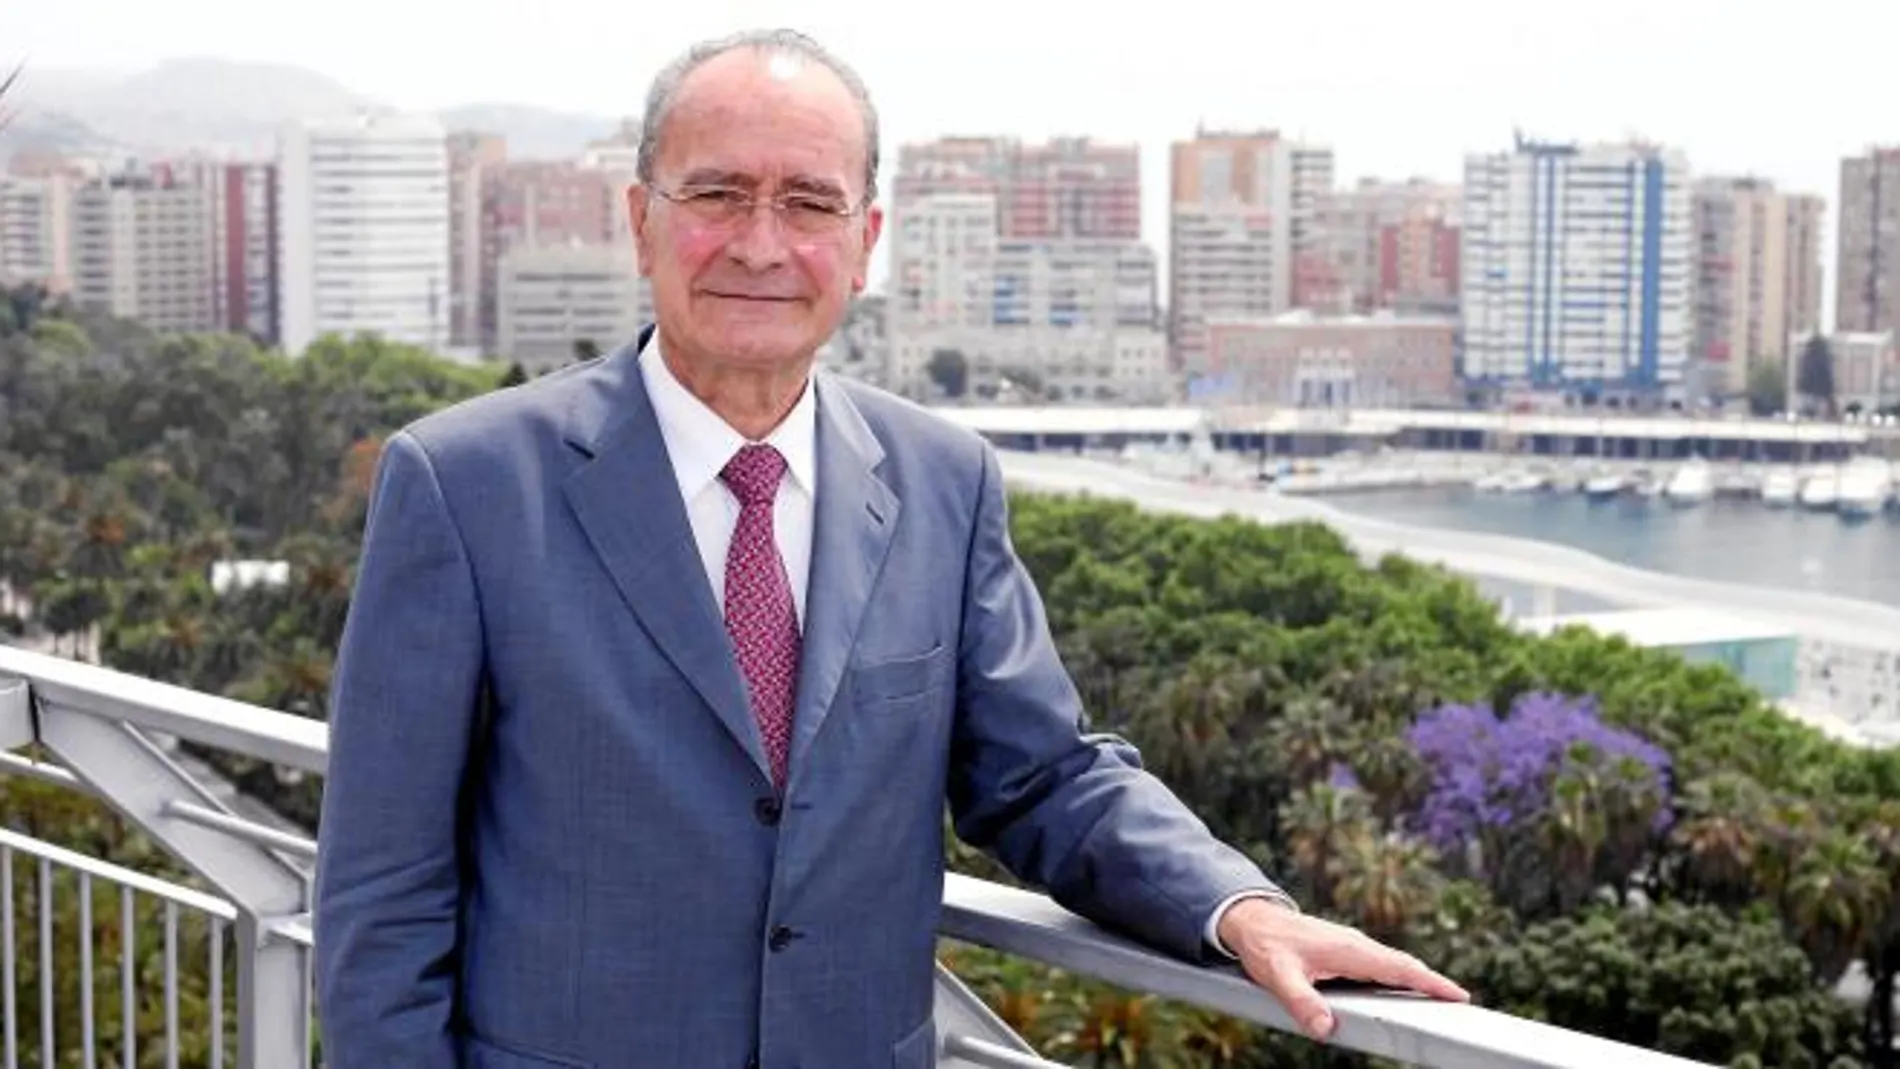 El alcalde de Málaga, el popular Francisco de la Torre